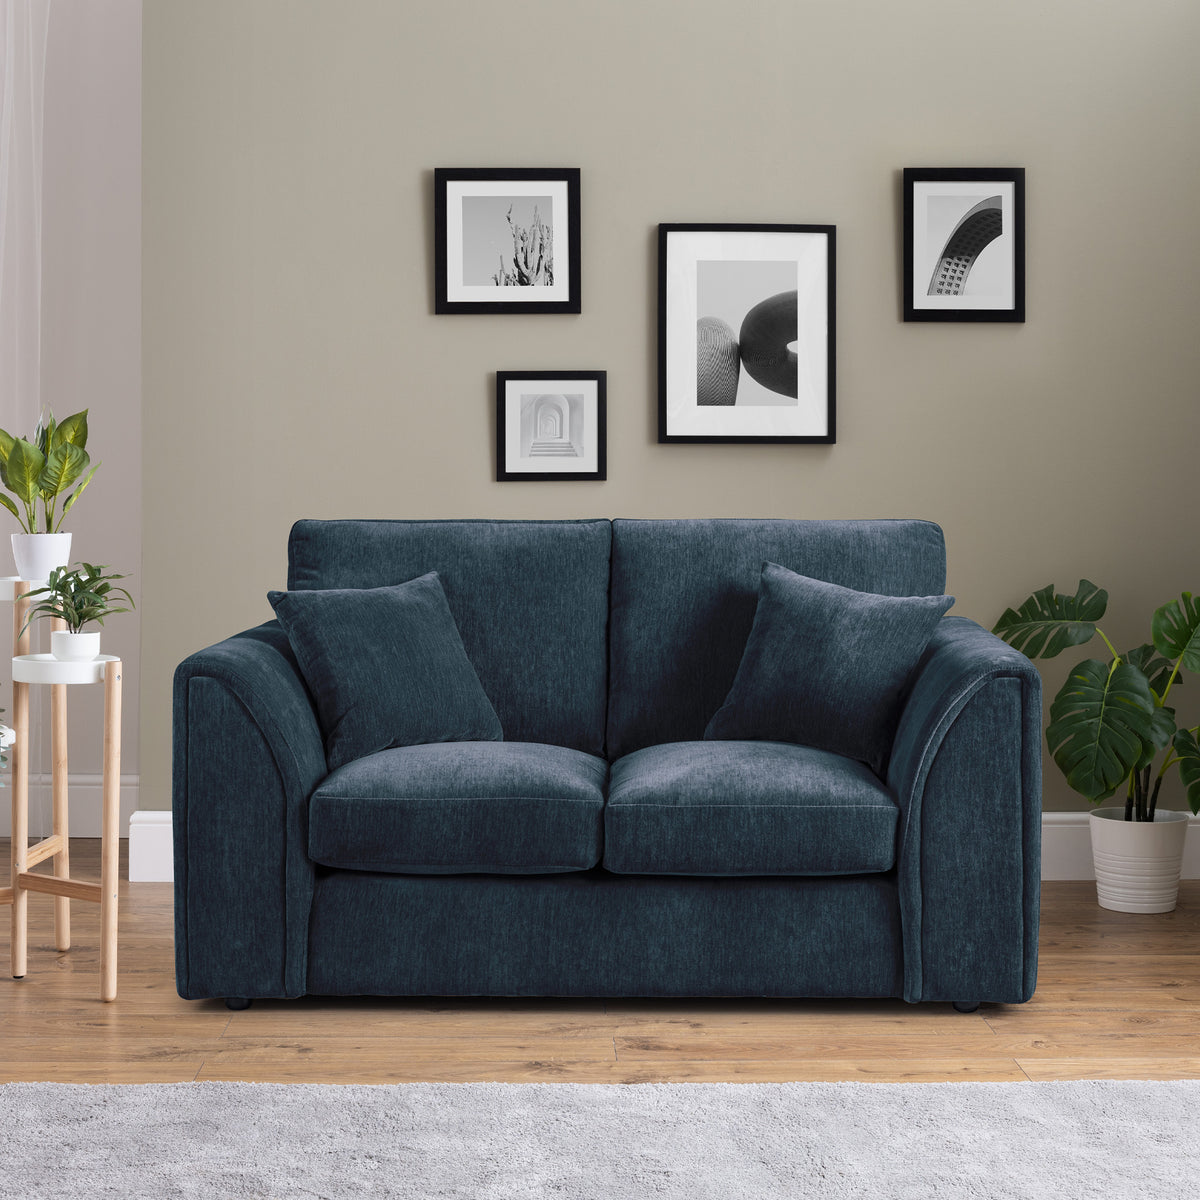 Dunford Navy Blue 2 Seater Sofa for living room